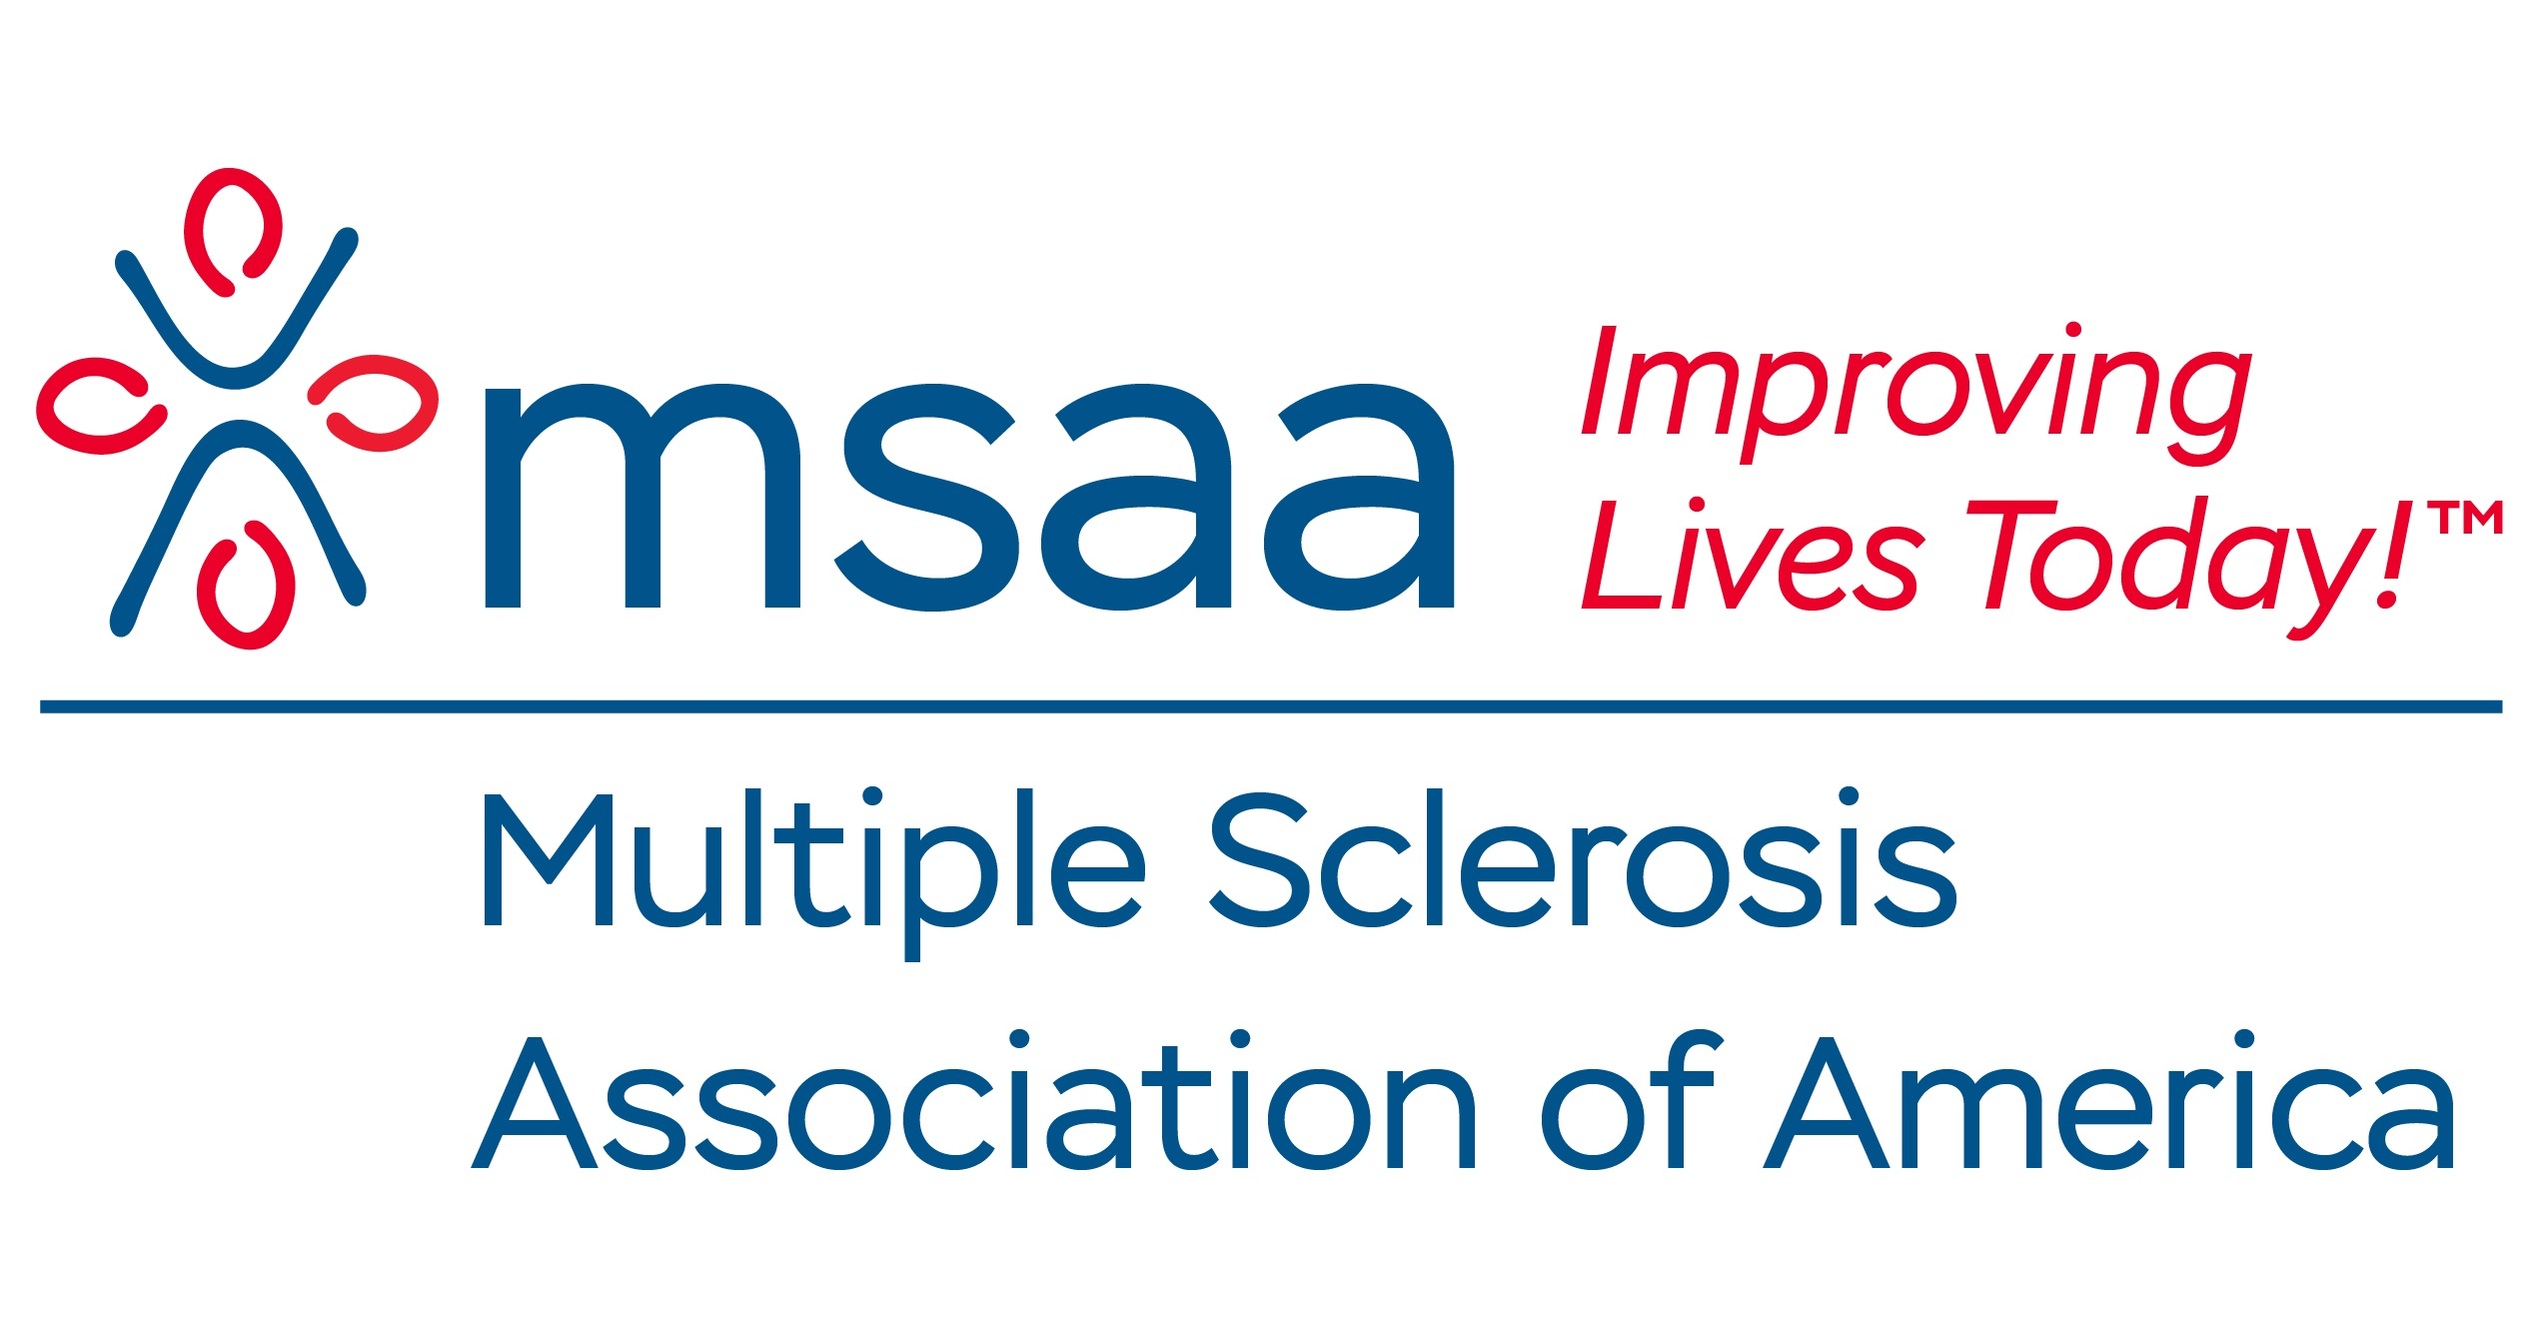 The Multiple Sclerosis Association of America (MSAA) Focuses on